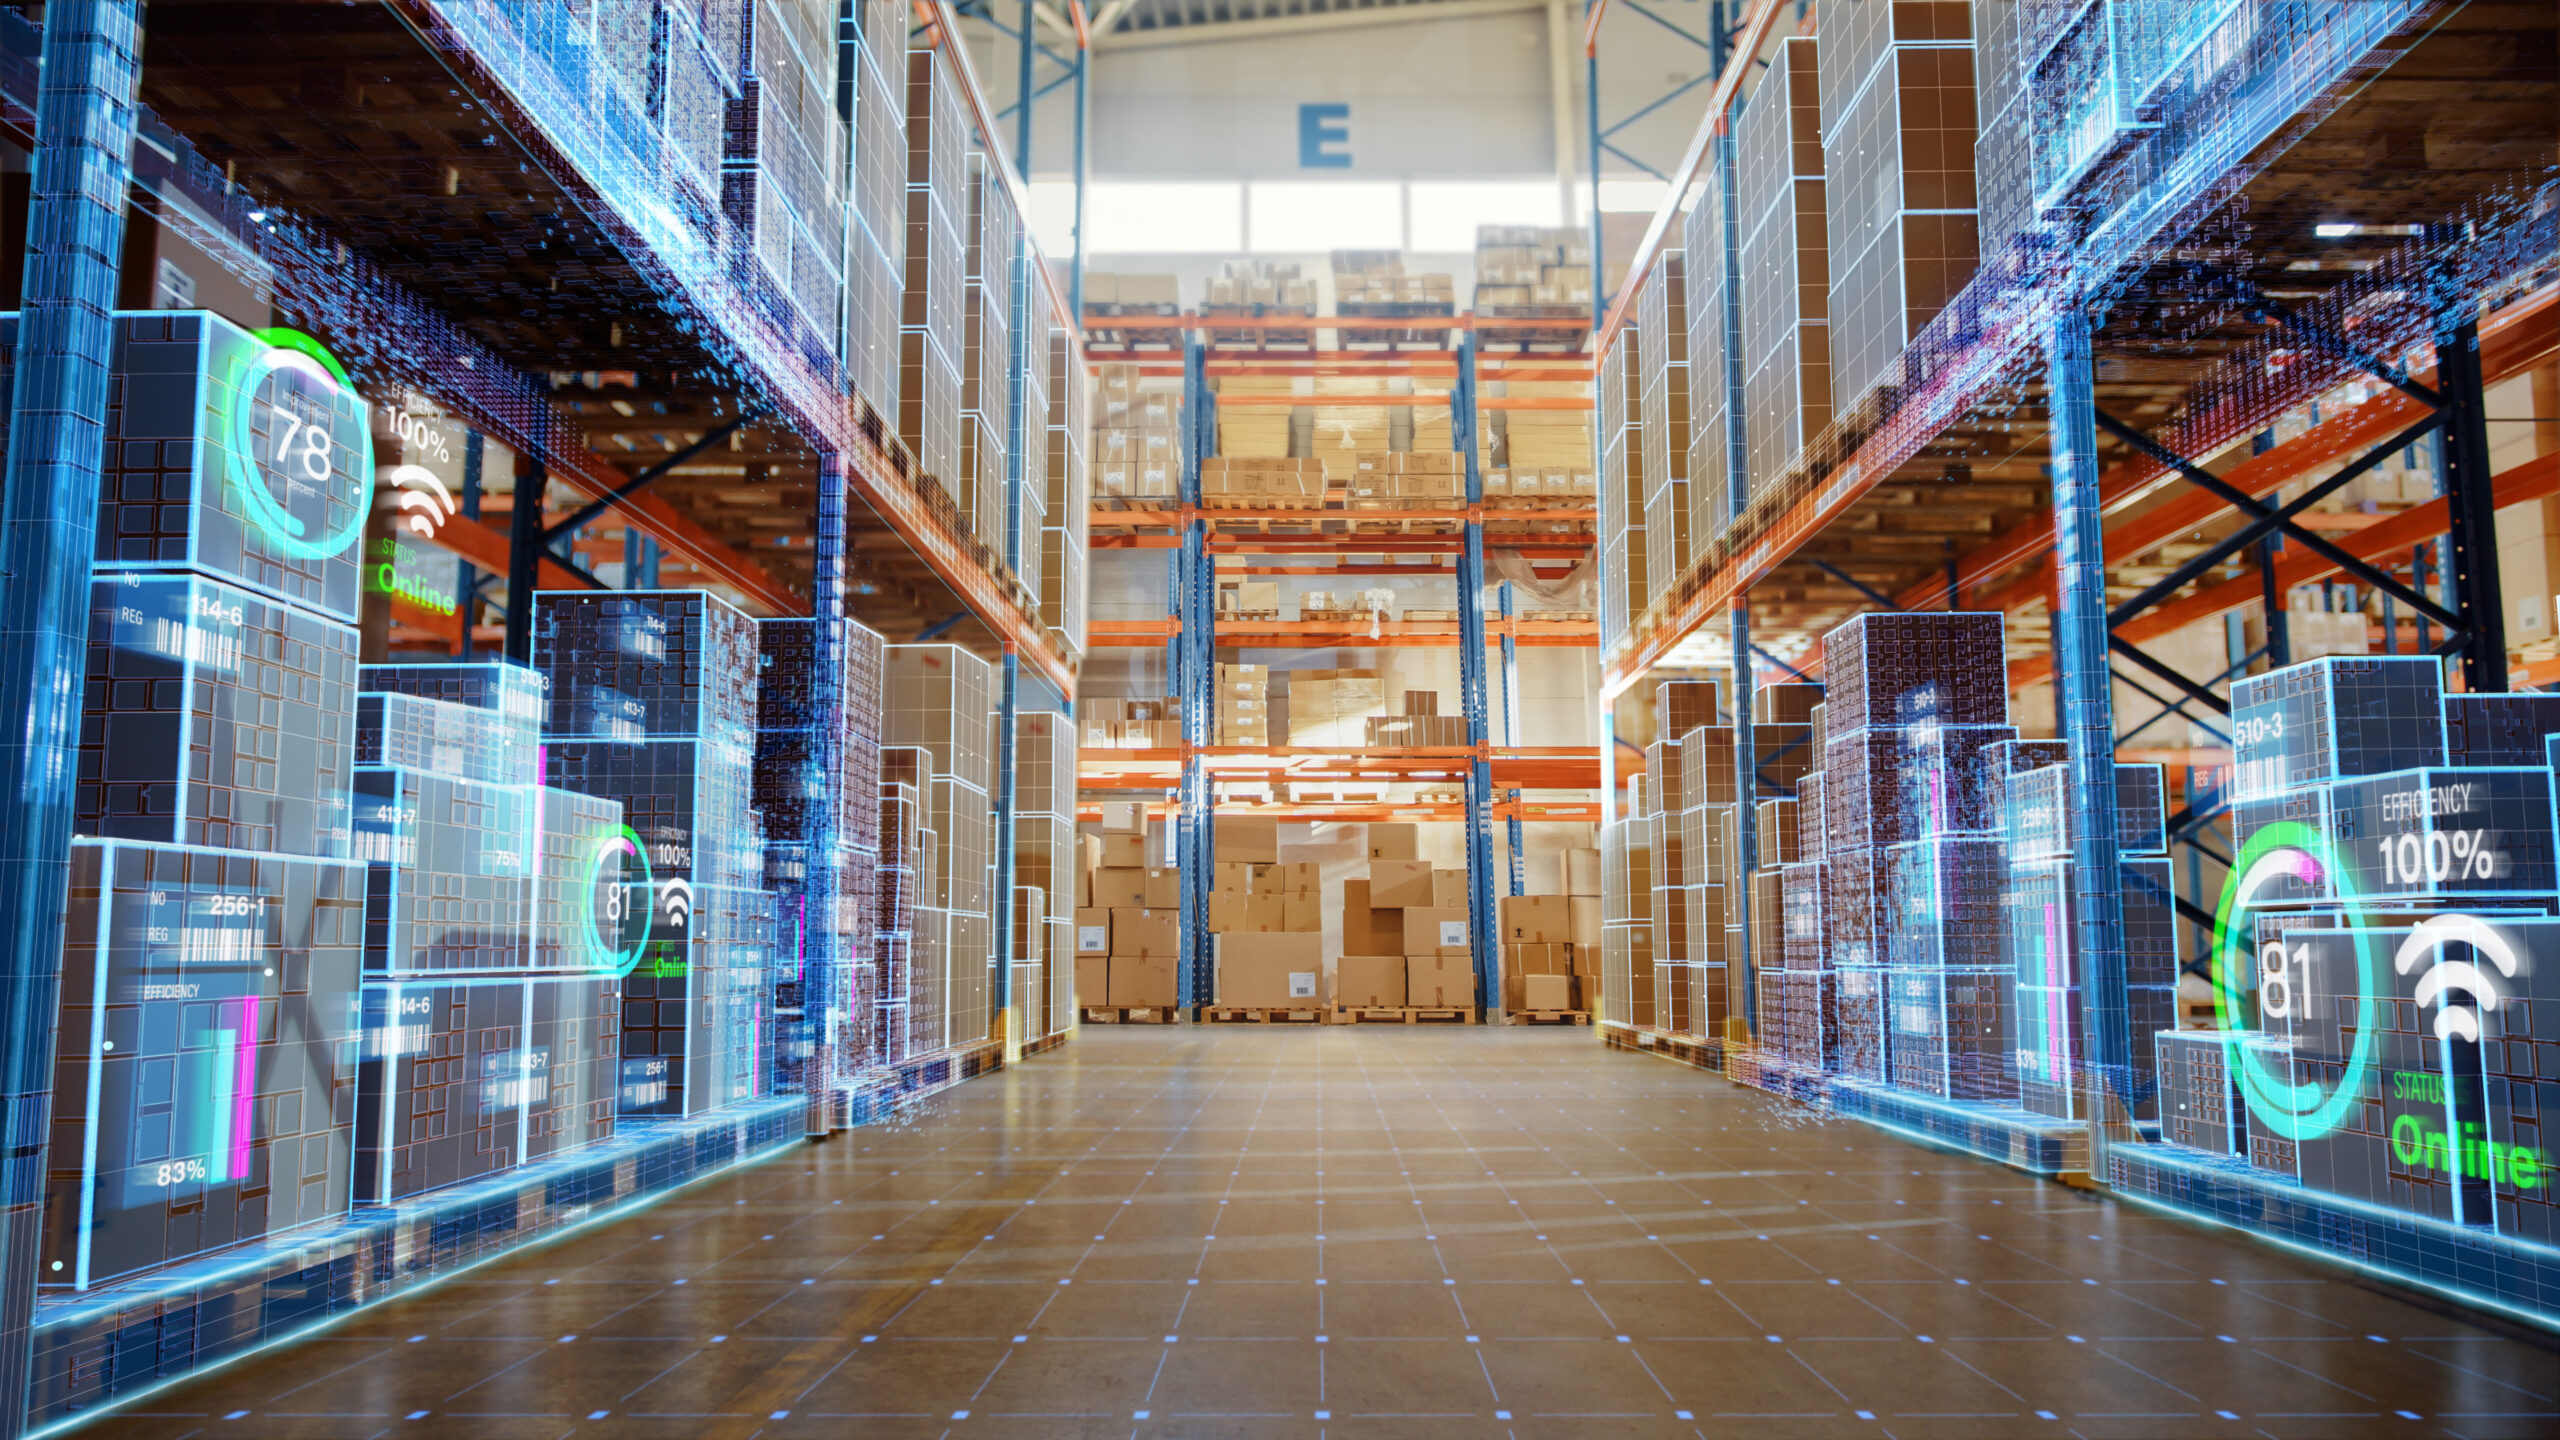 Futuristic Technology Retail Warehouse: Digitalization and Visua